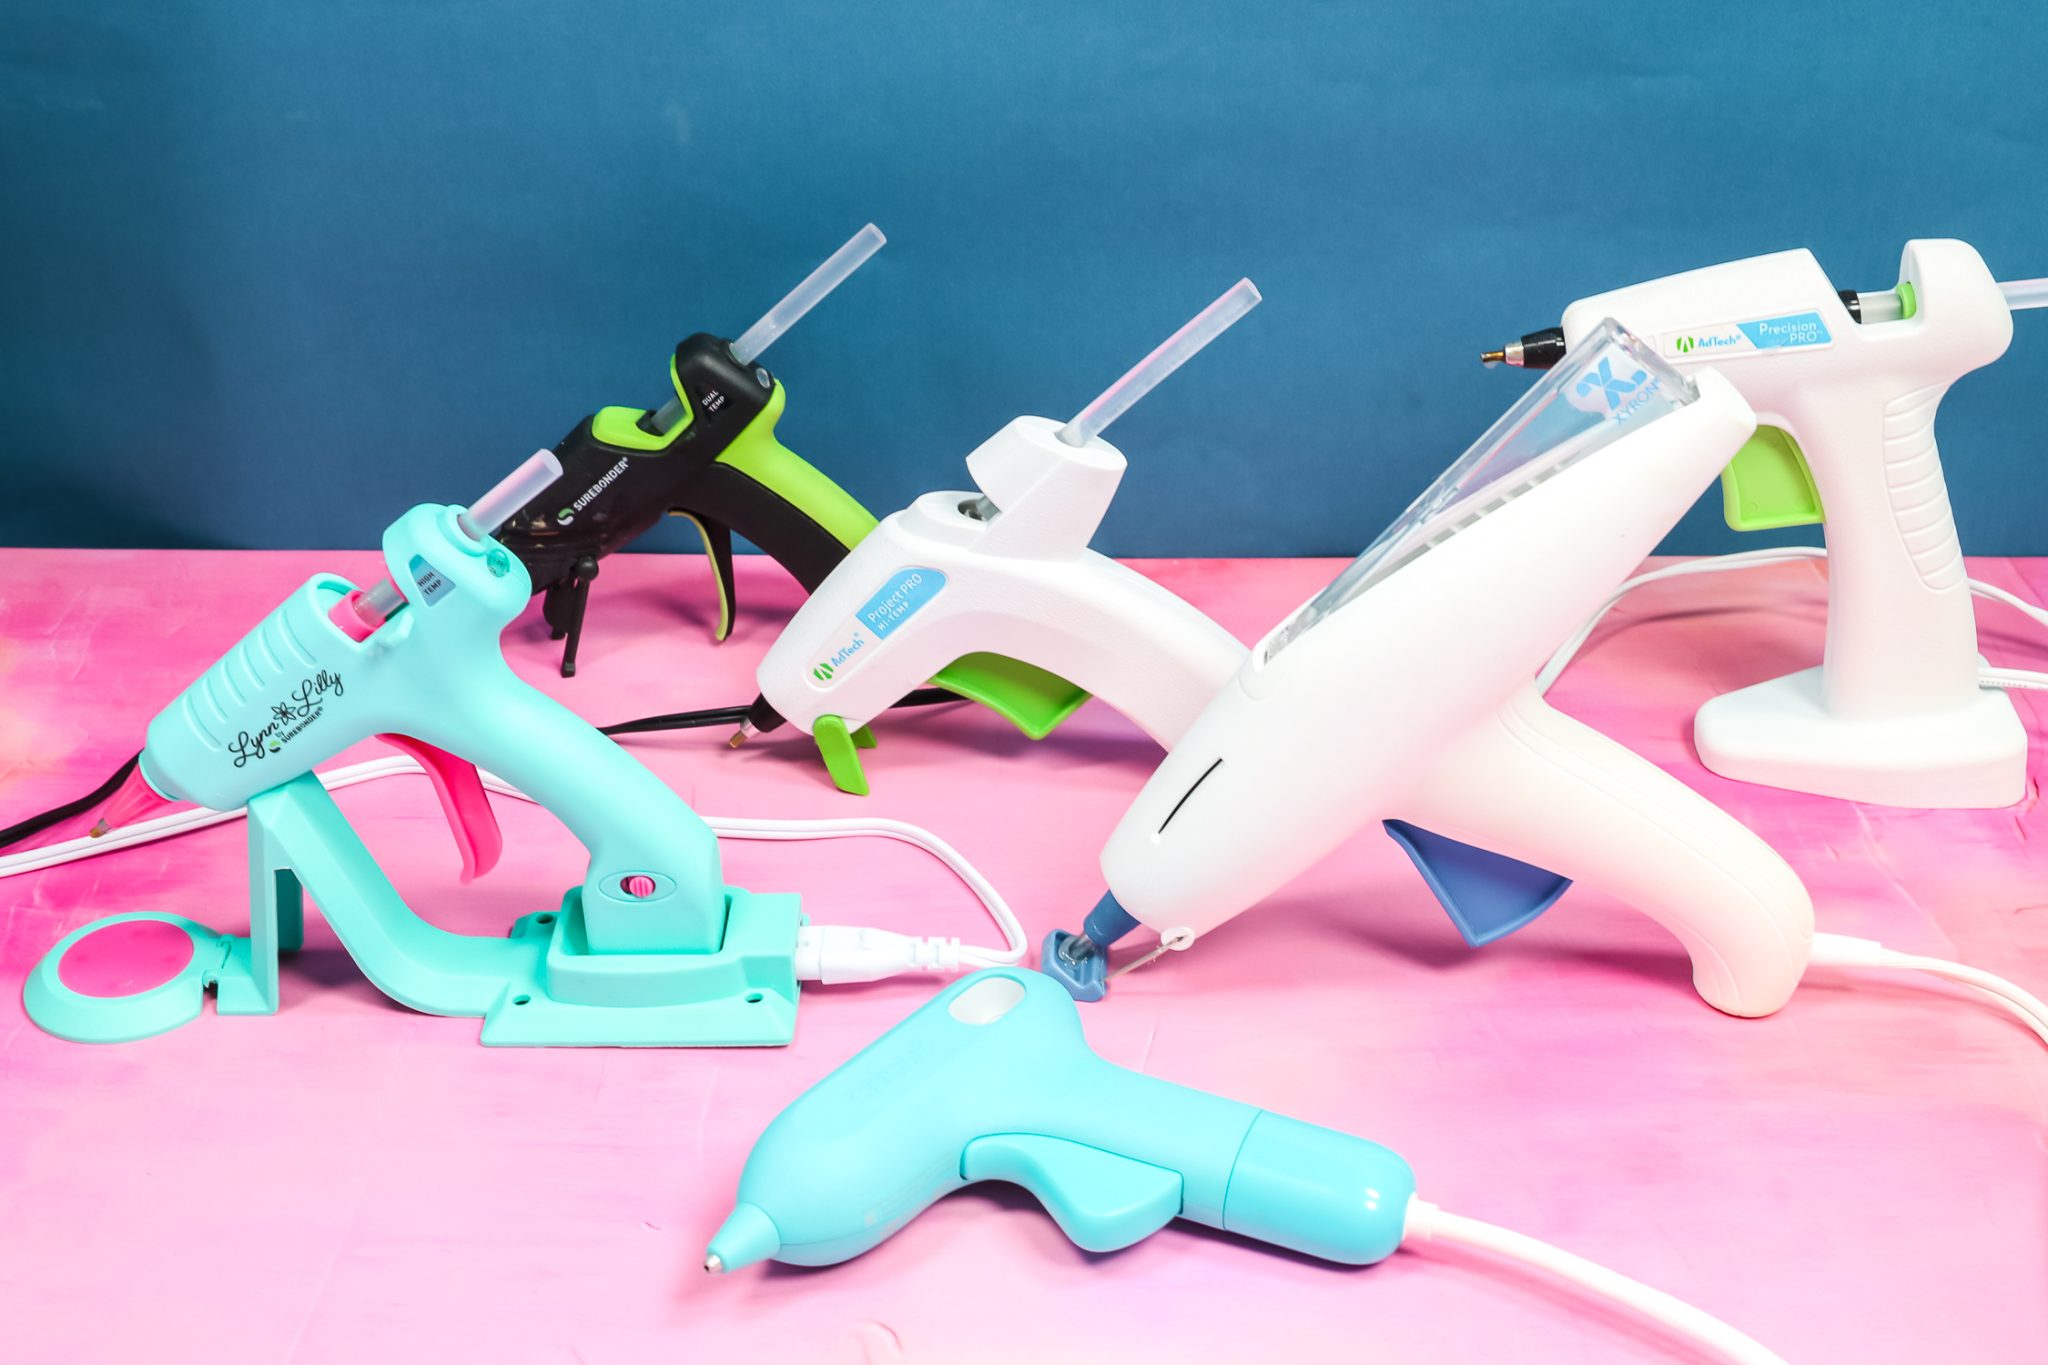 Surebonder Mini Low Temp Glue Gun - Crafts for Kids and Fun Home Activities